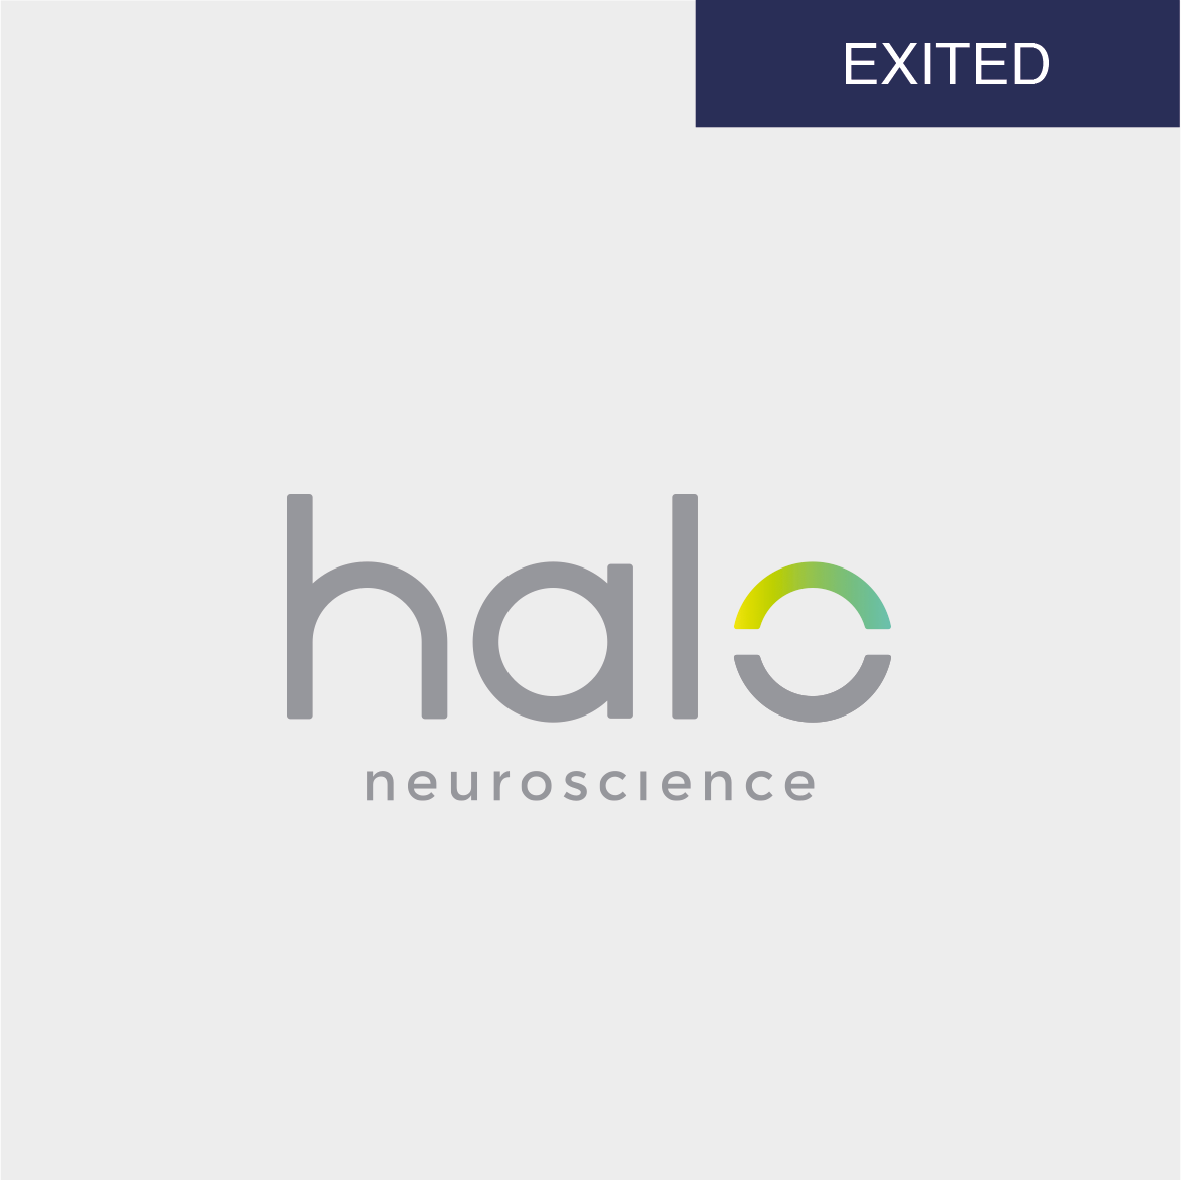 Halo Neuroscience Acquired